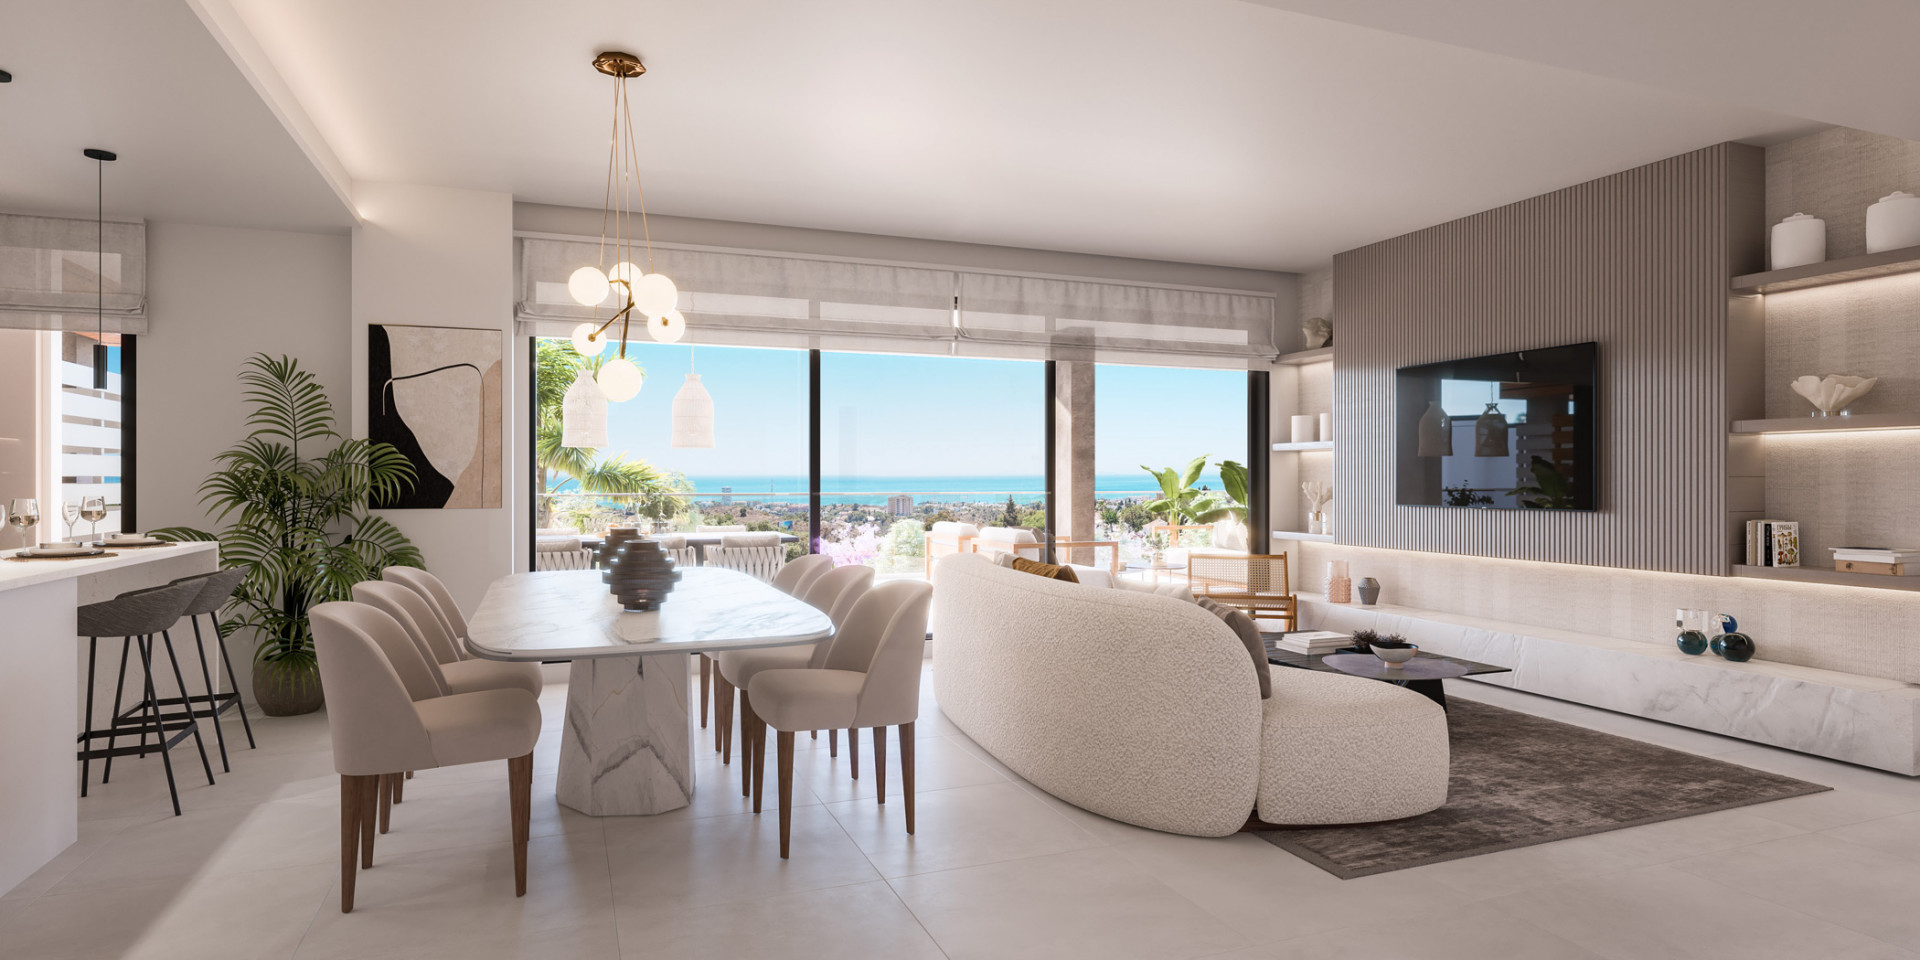 Newly built modern boutique residential complex of apartments for sale in Altos de los Monteros – Marbella